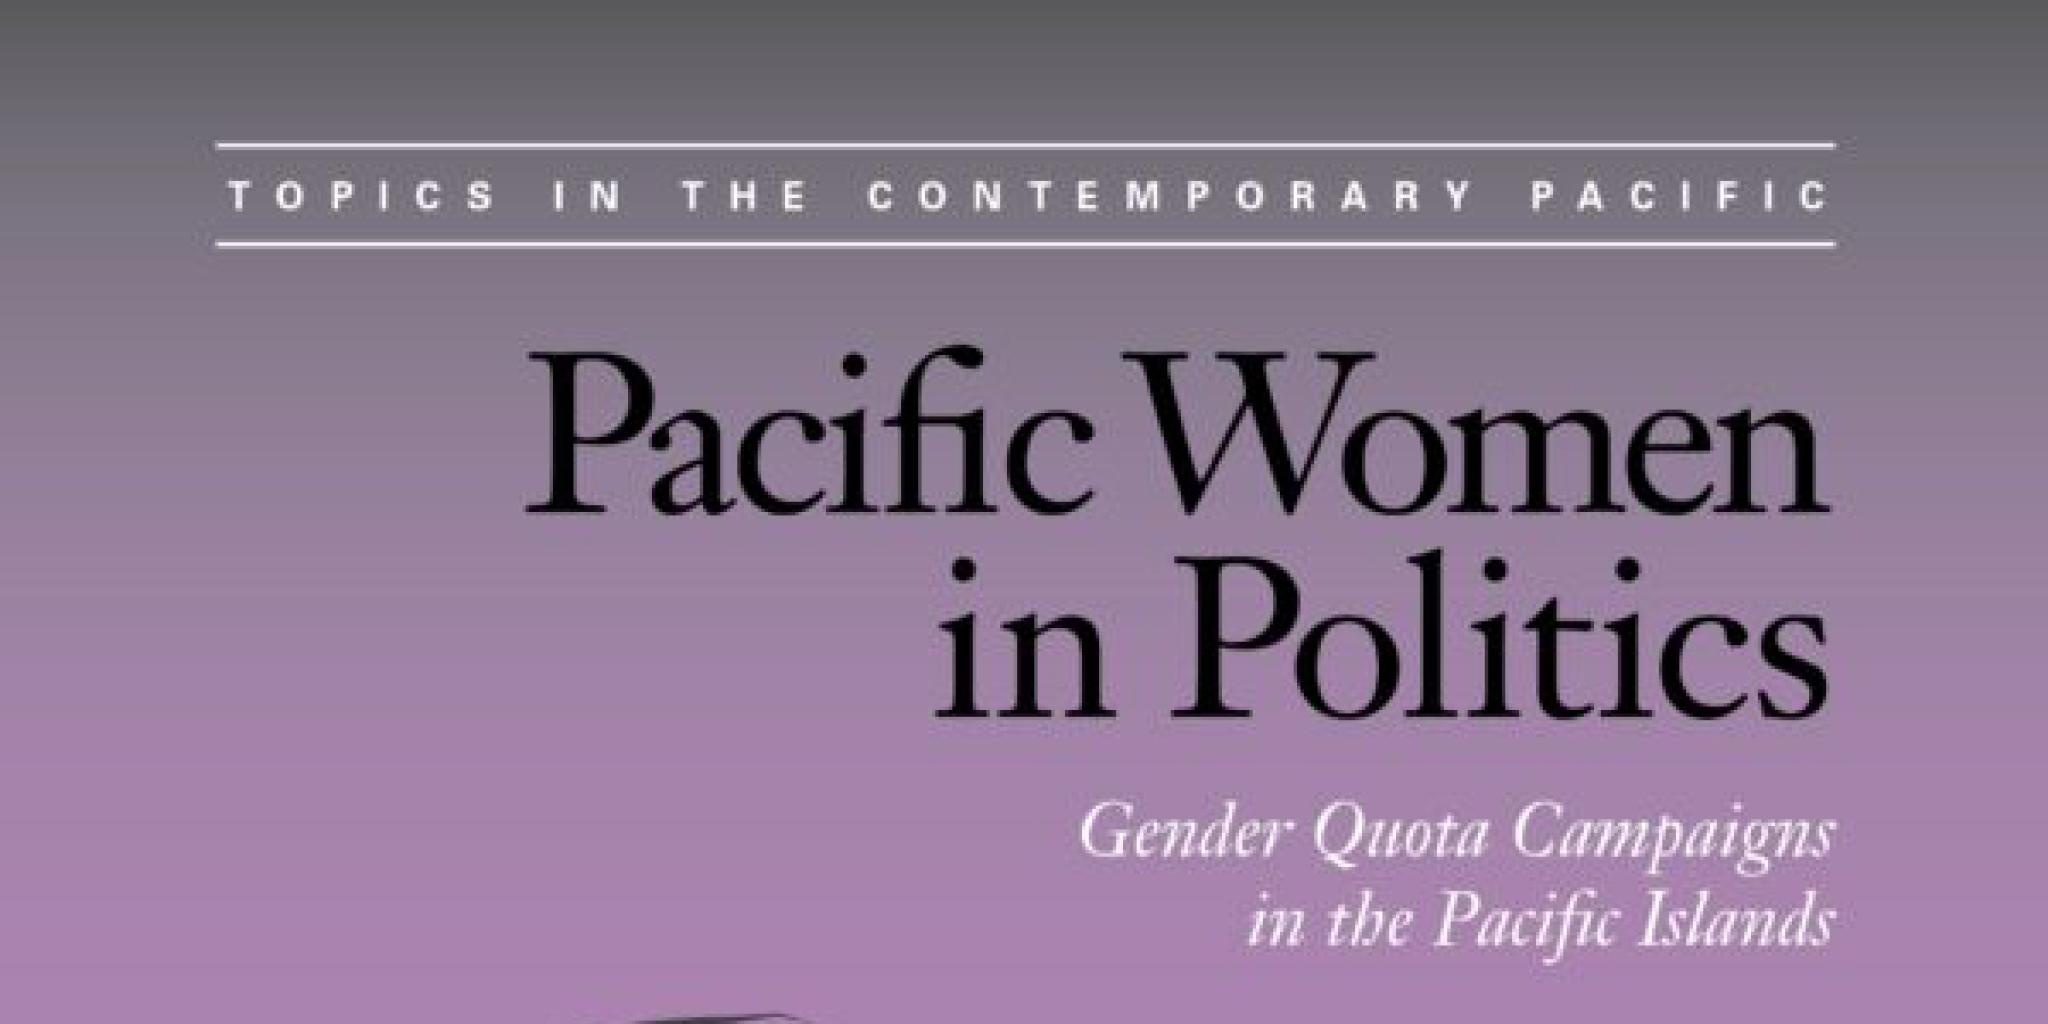 Pacific Women in Politics book cover 2to1